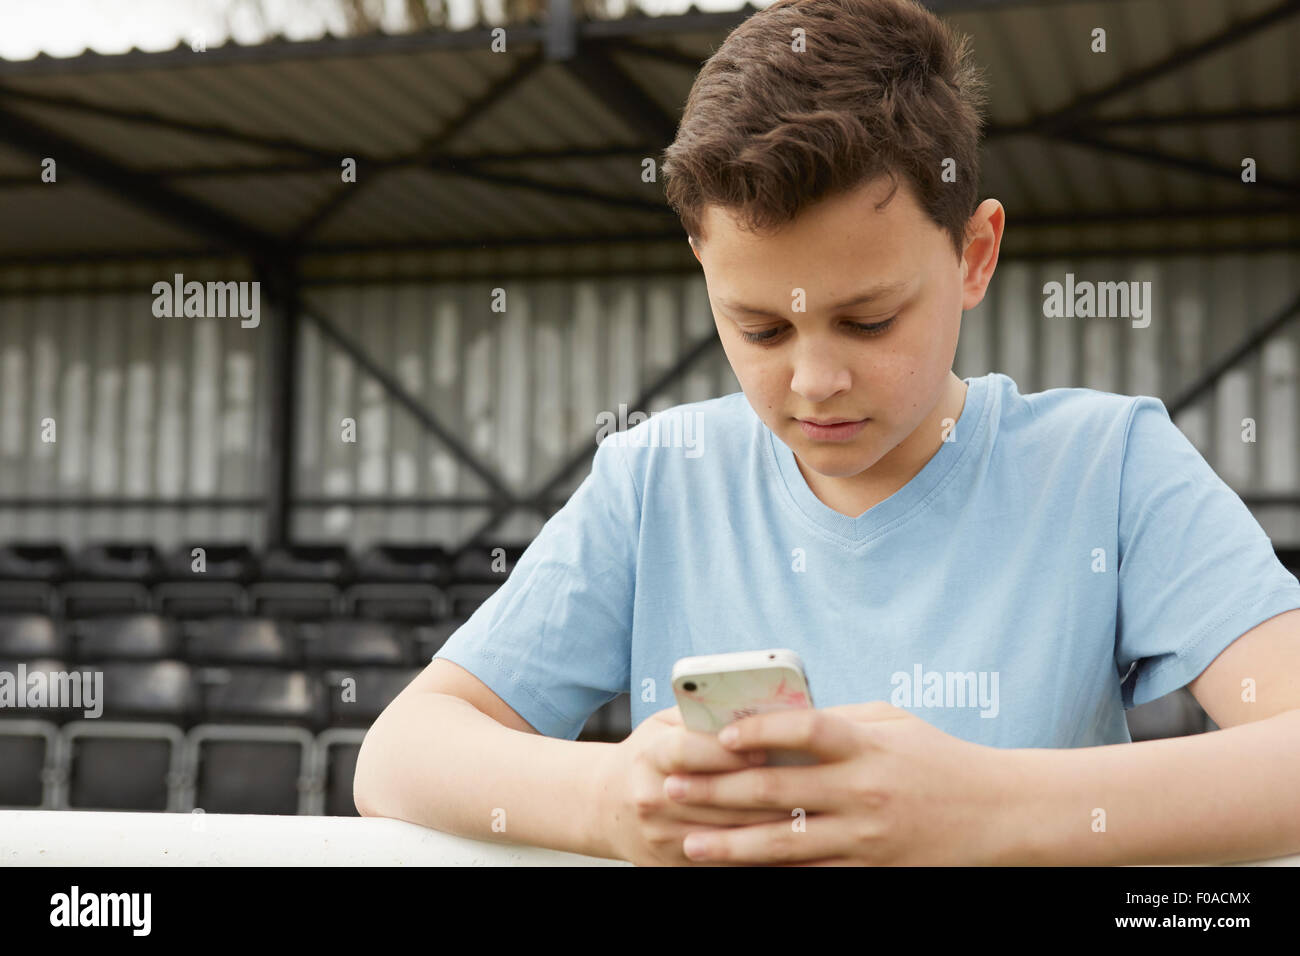 Boys texting on smartphone Stock Photo